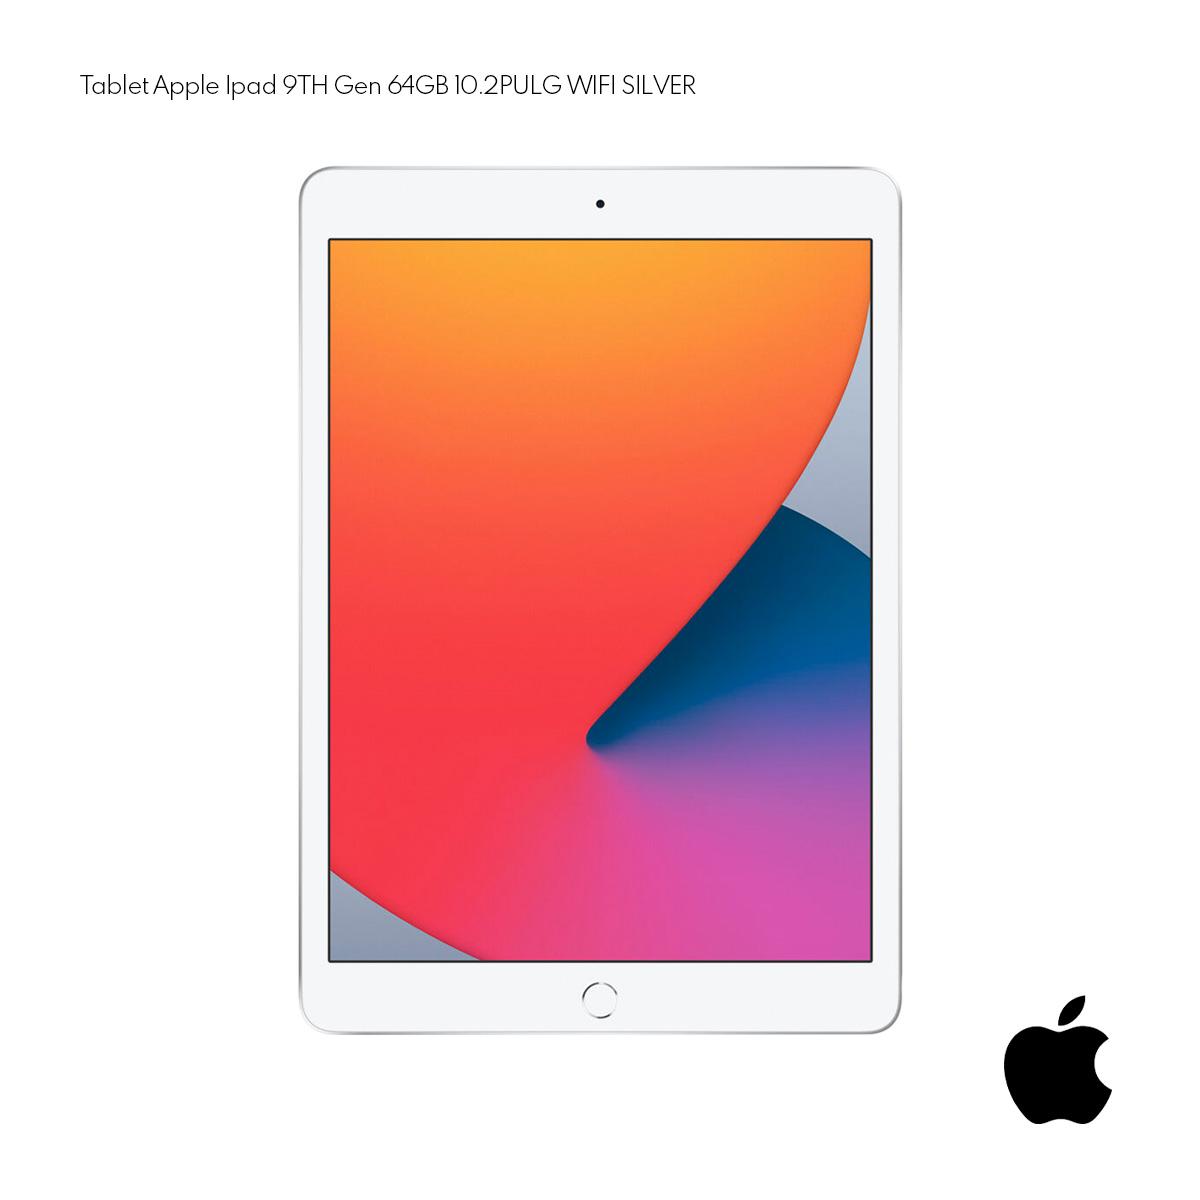 Combo Tablet Apple Ipad 9 Generación 64GB 10.2